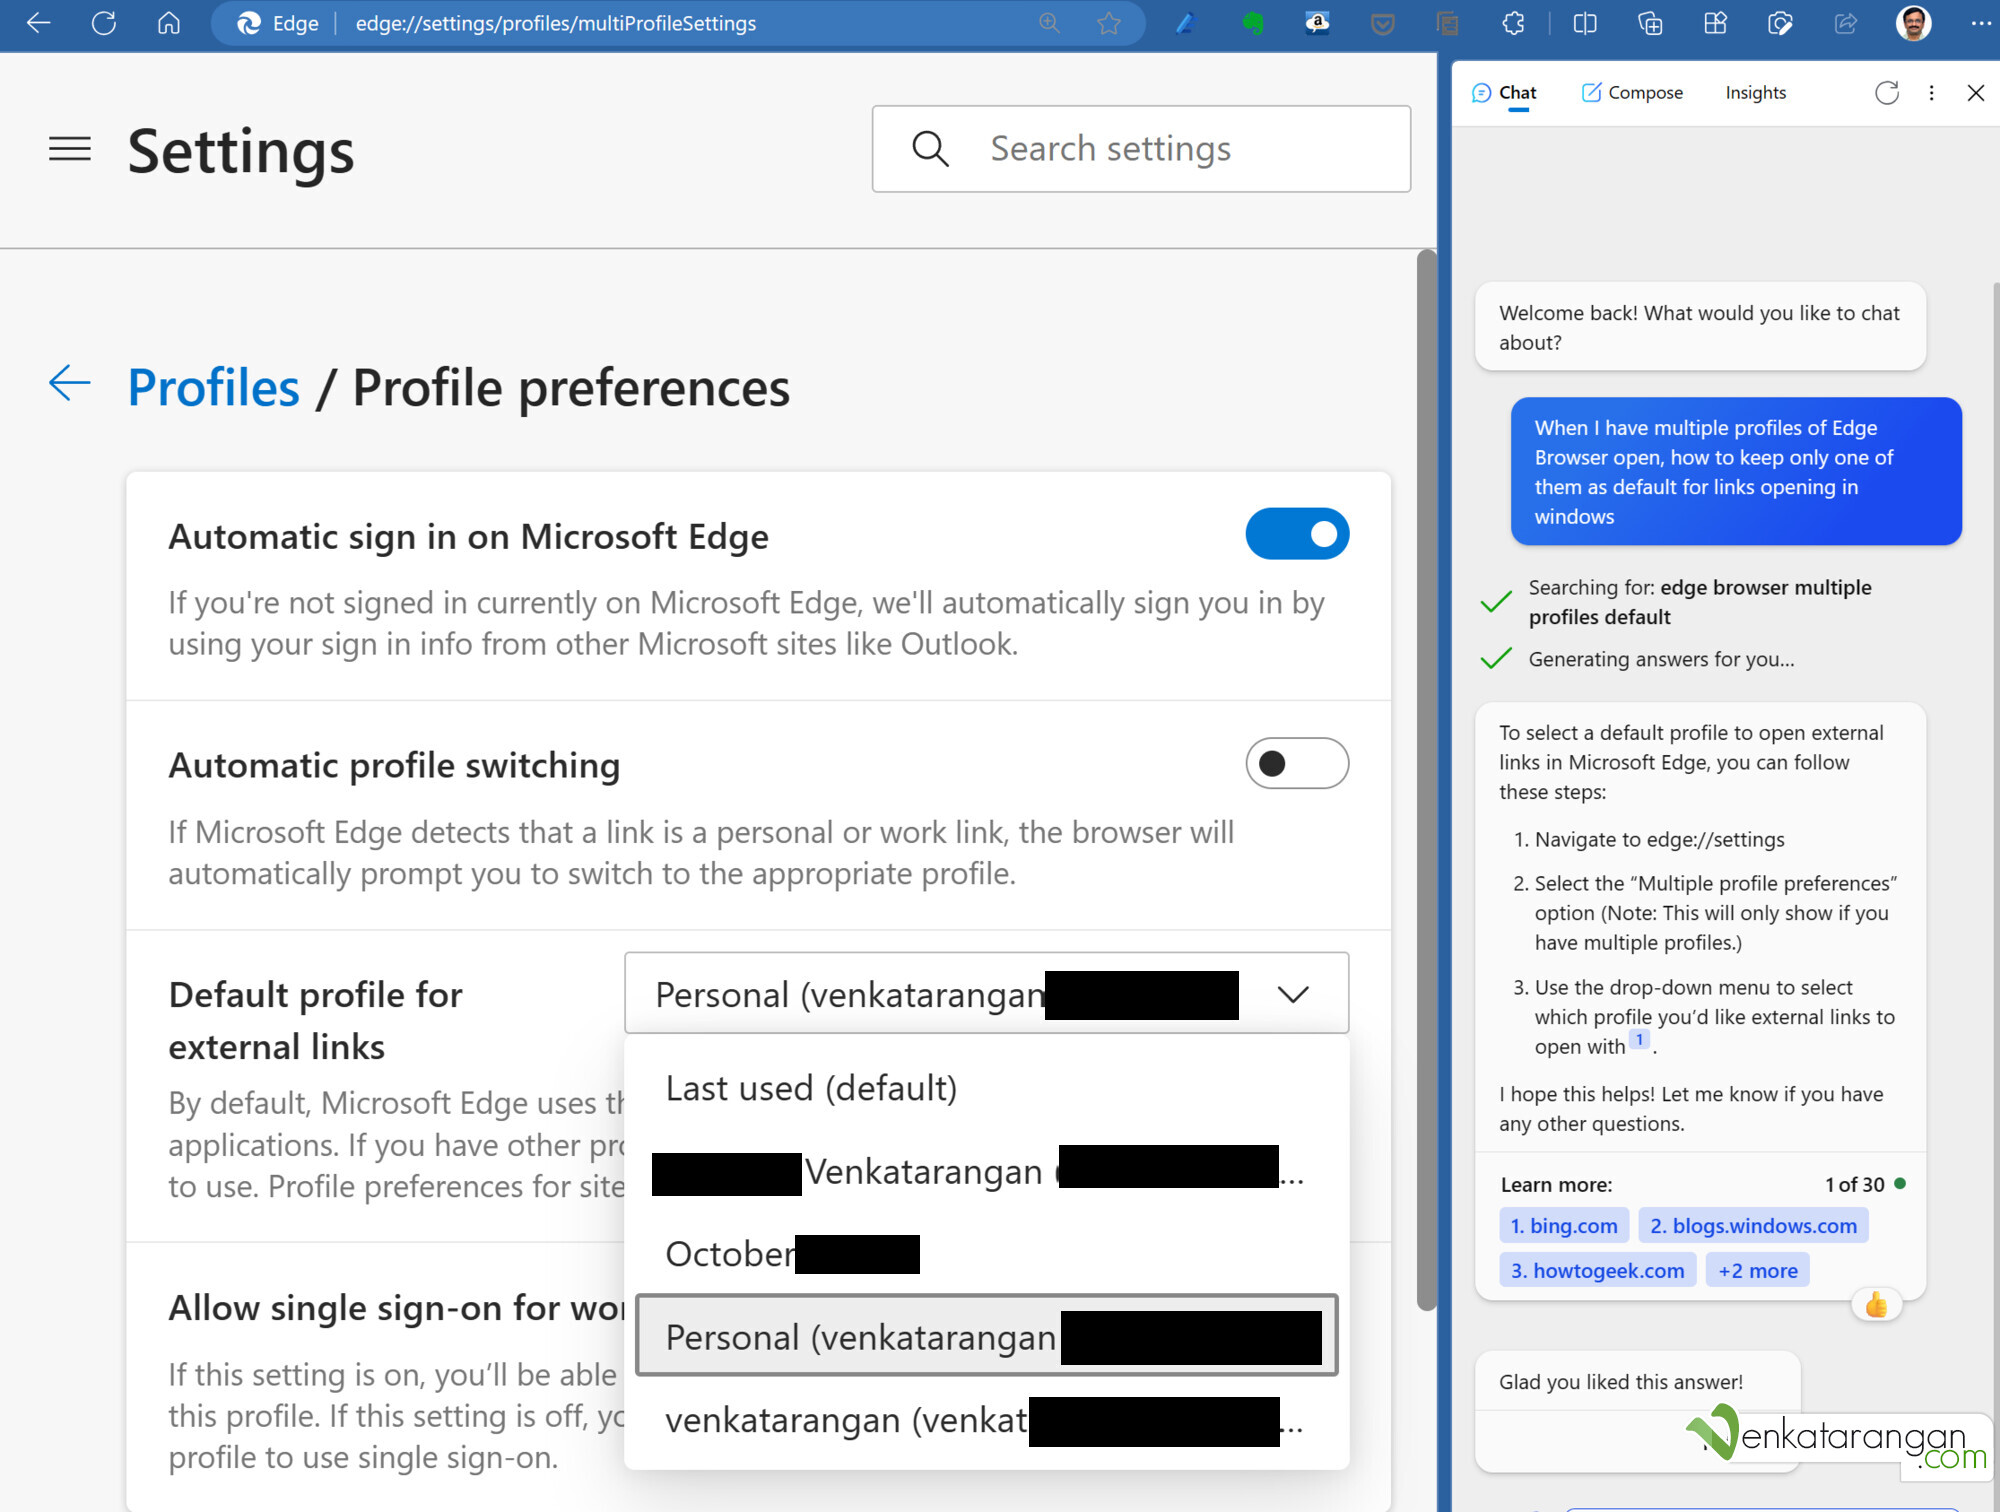 Microsoft Edge Browser - Profile preferences